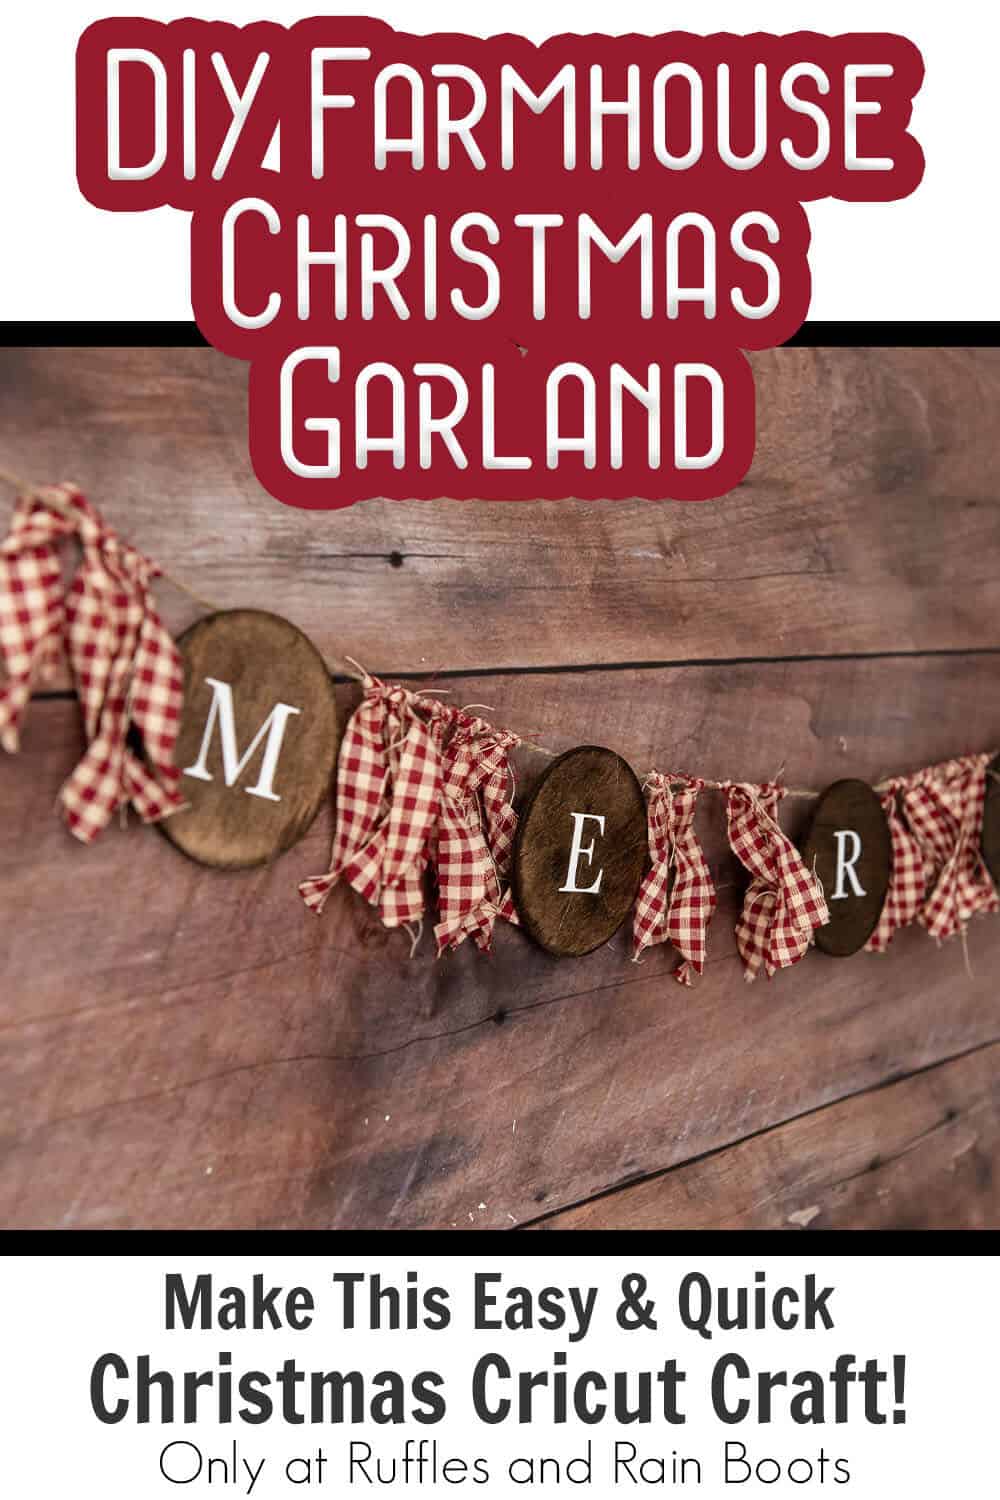 easy farmhouse christmas garland cricut craft with text which reads diy farmhouse christmas garland make this easy & quick christmas cricut craft!